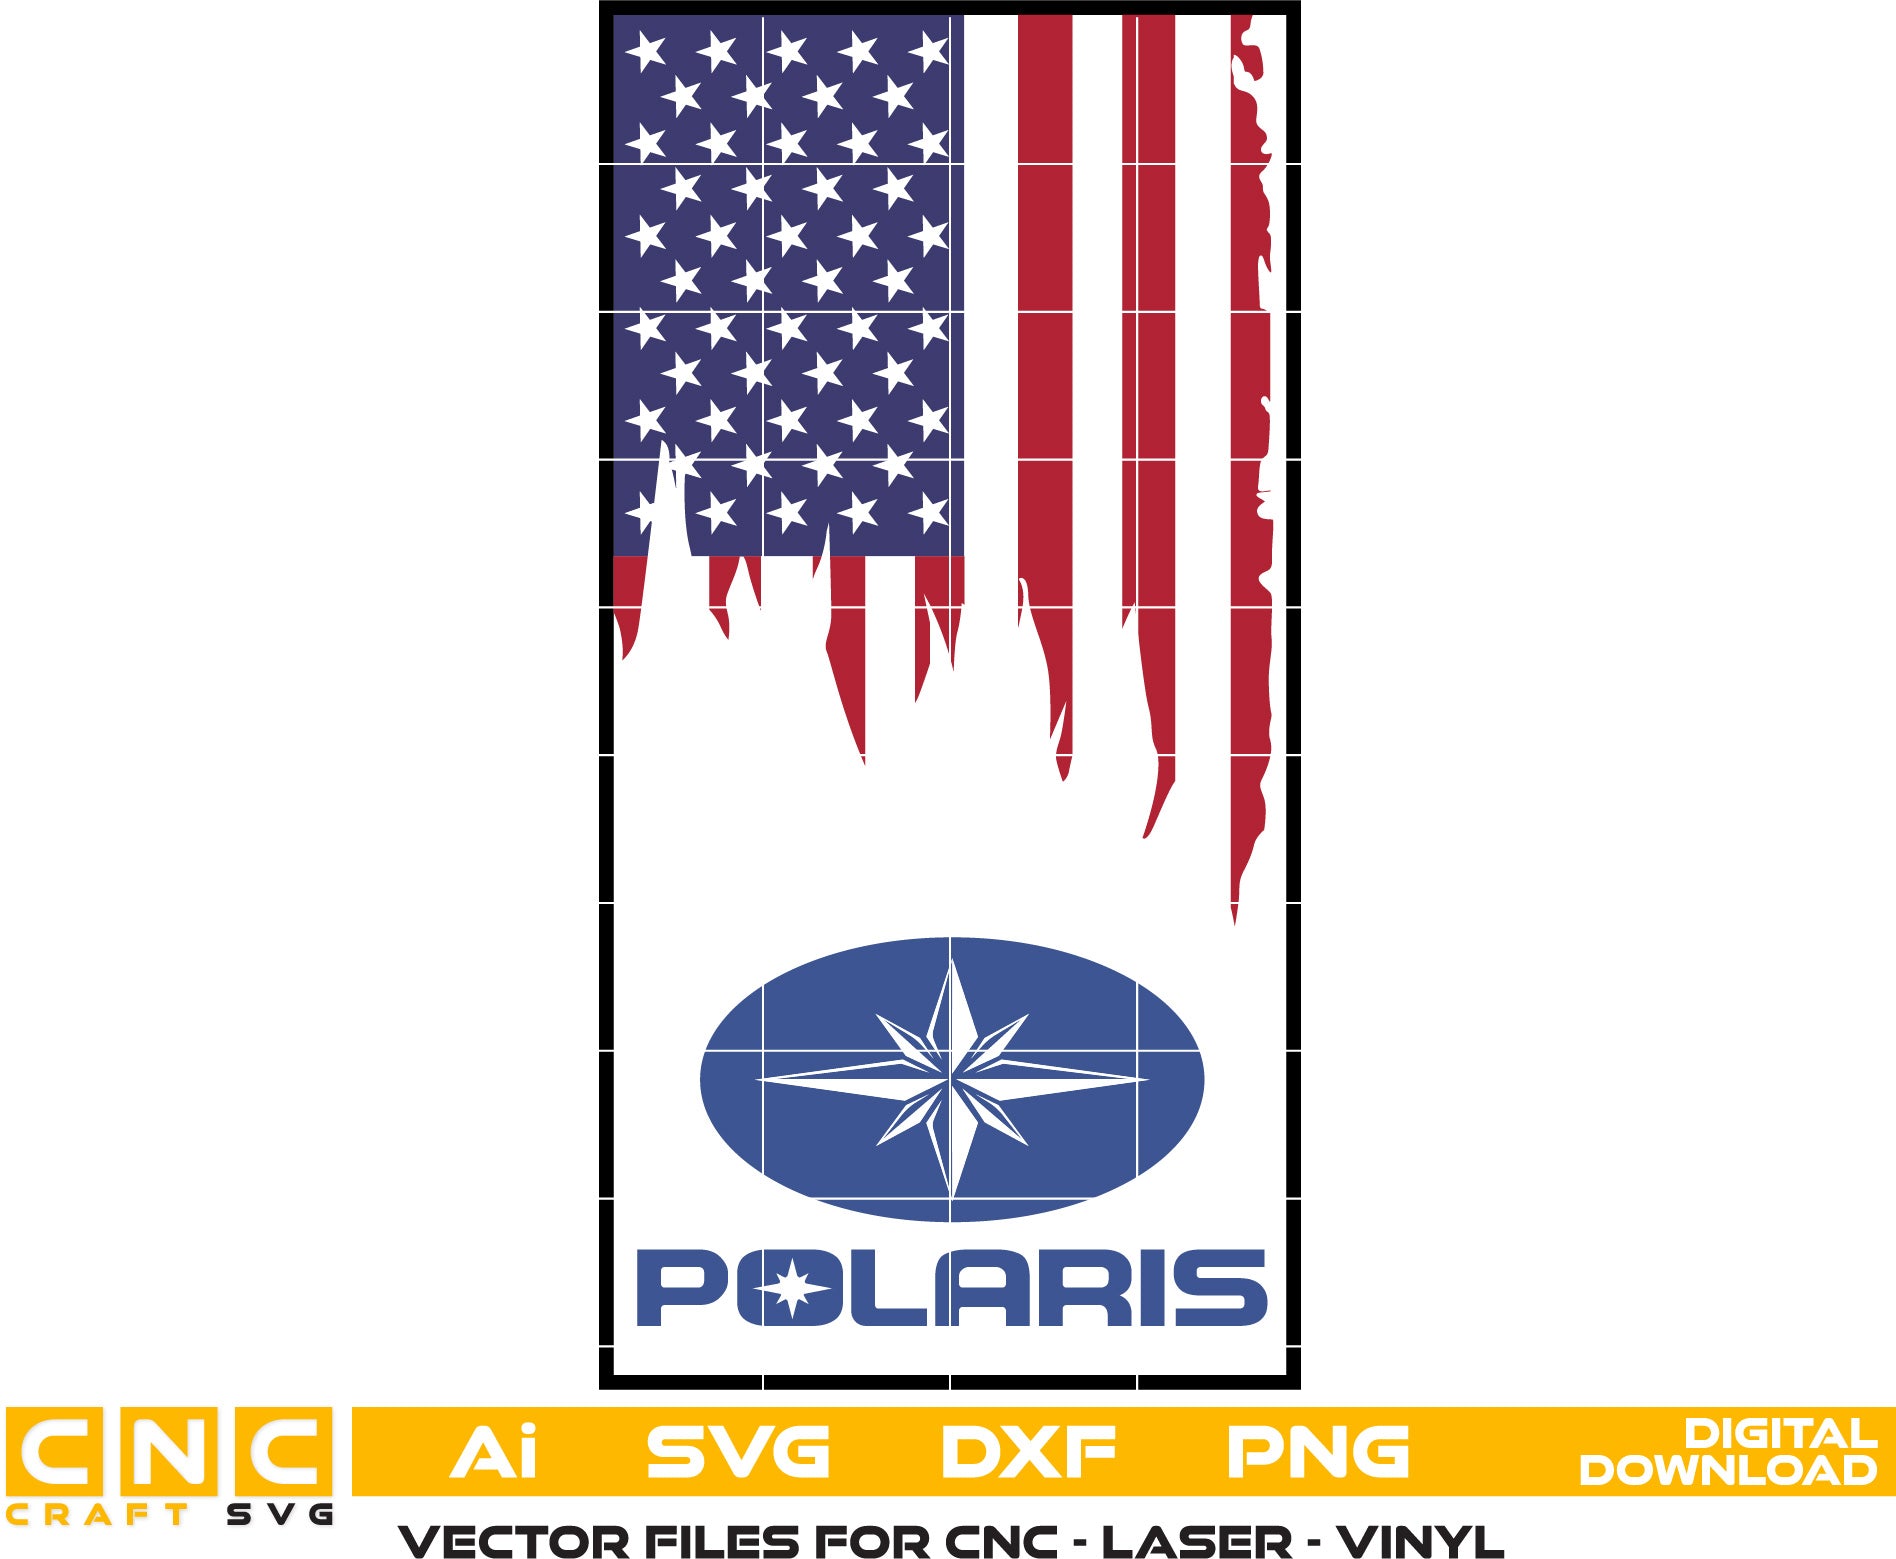 Polaris Usa Flag Vector art Svg,Dxf,Jpg,Png & Ai files for Engraving and Printing